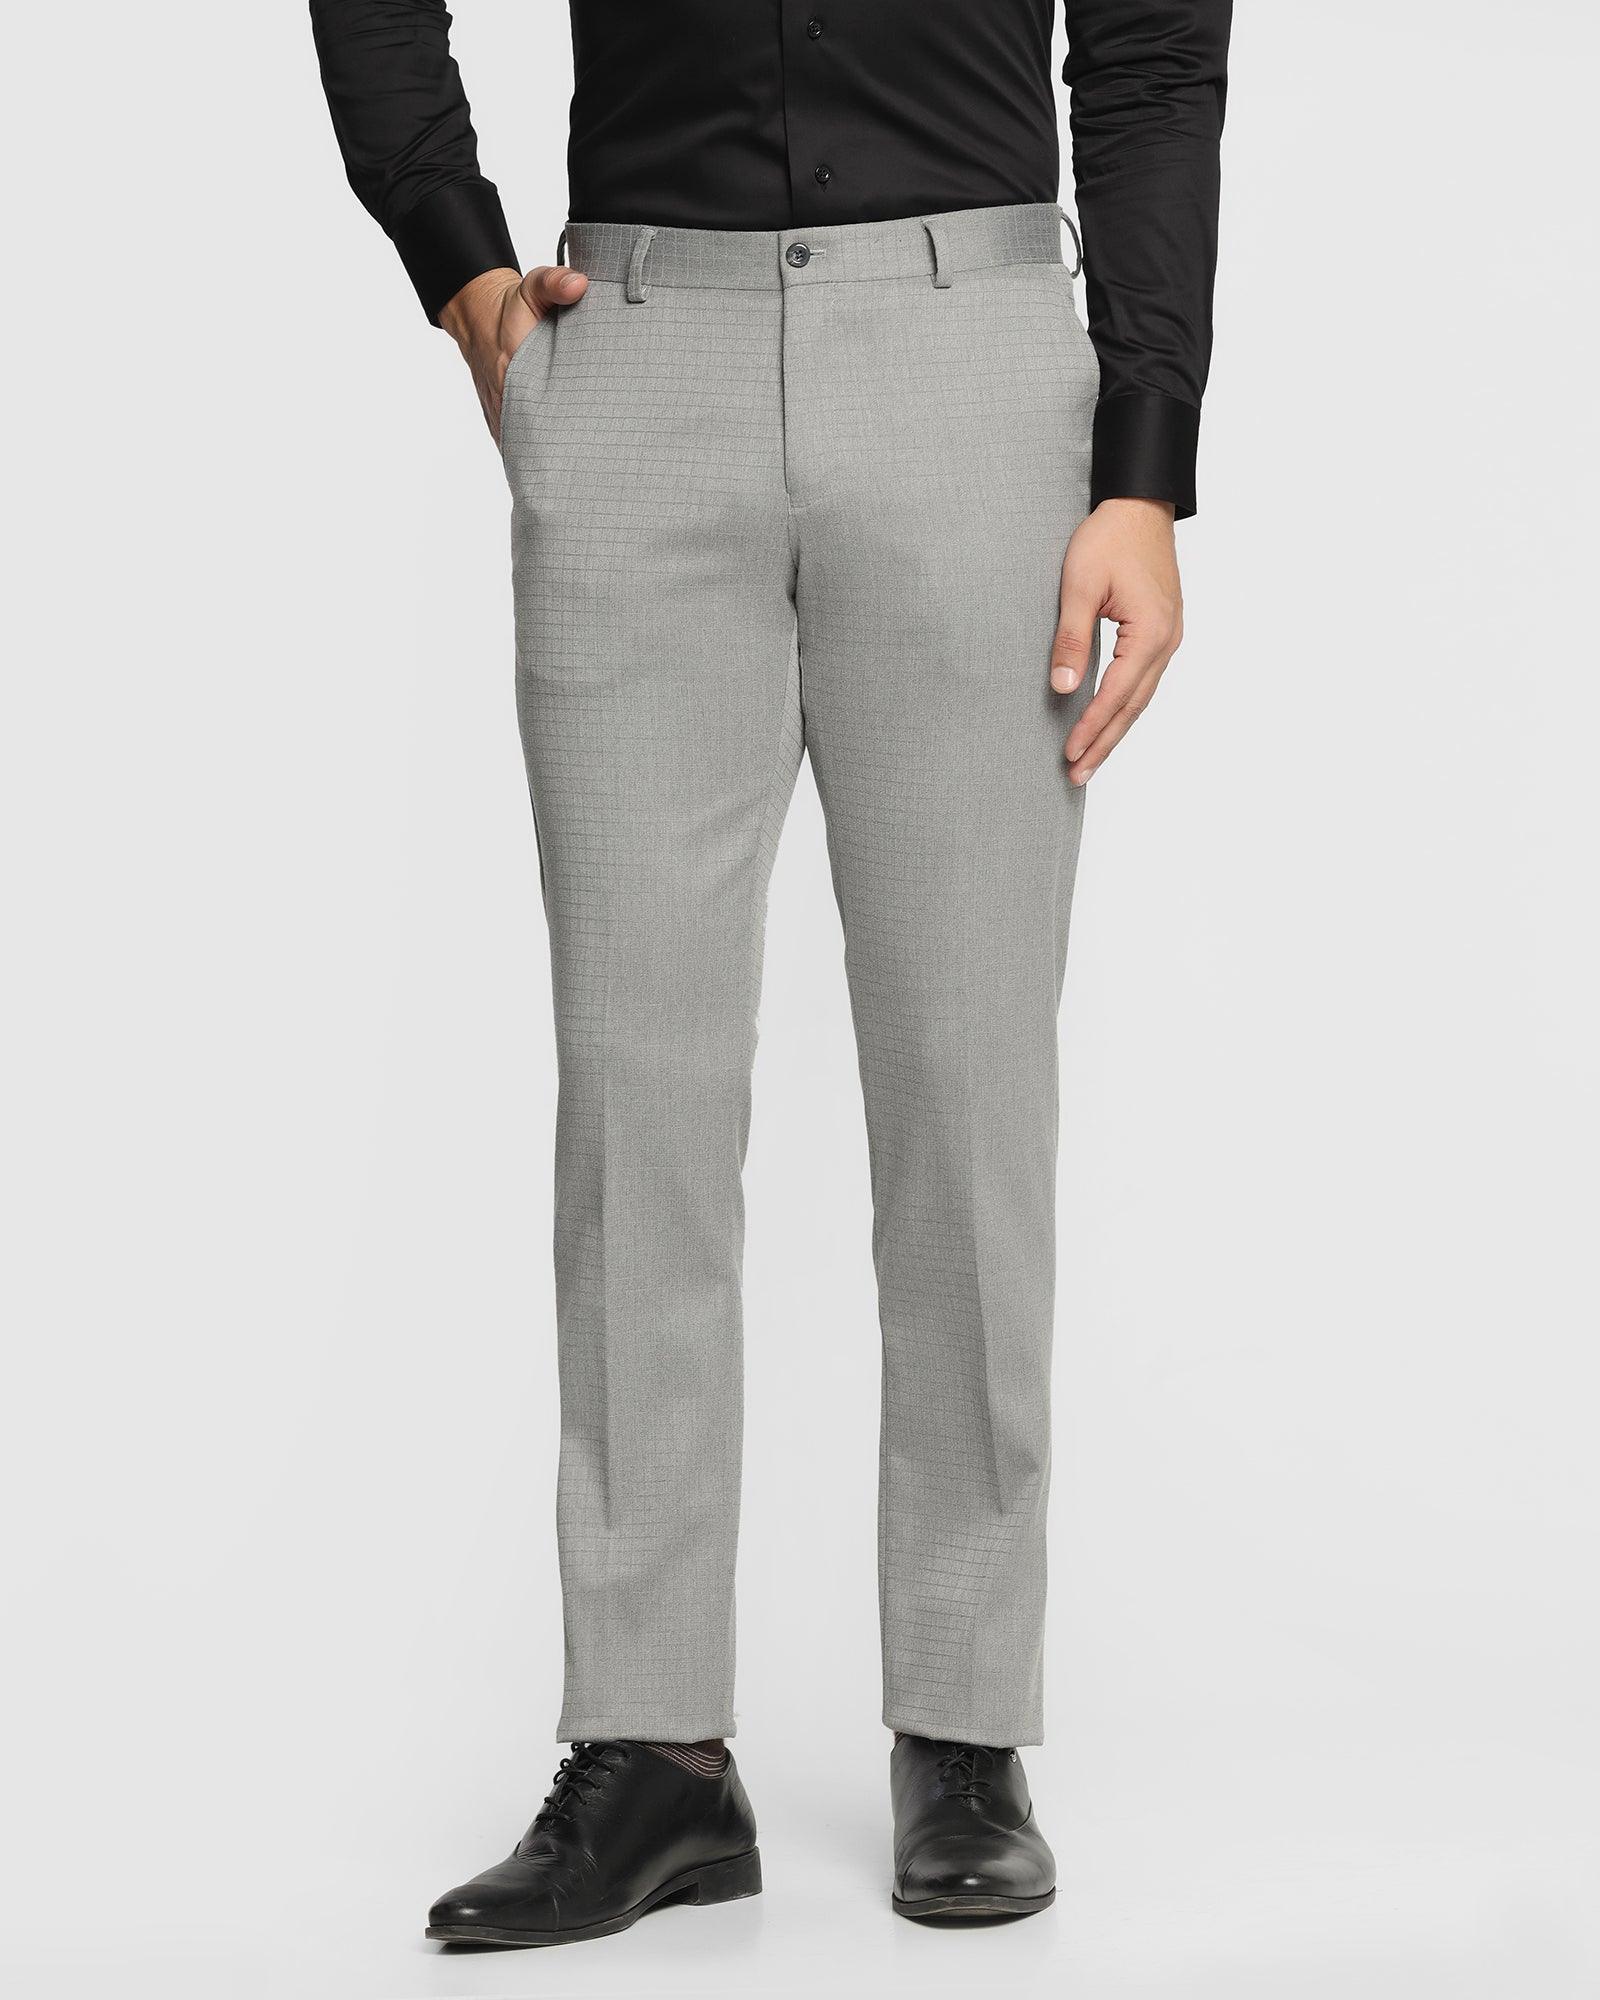 Slim Fit B-91 Formal Grey Textured Trouser - Trim